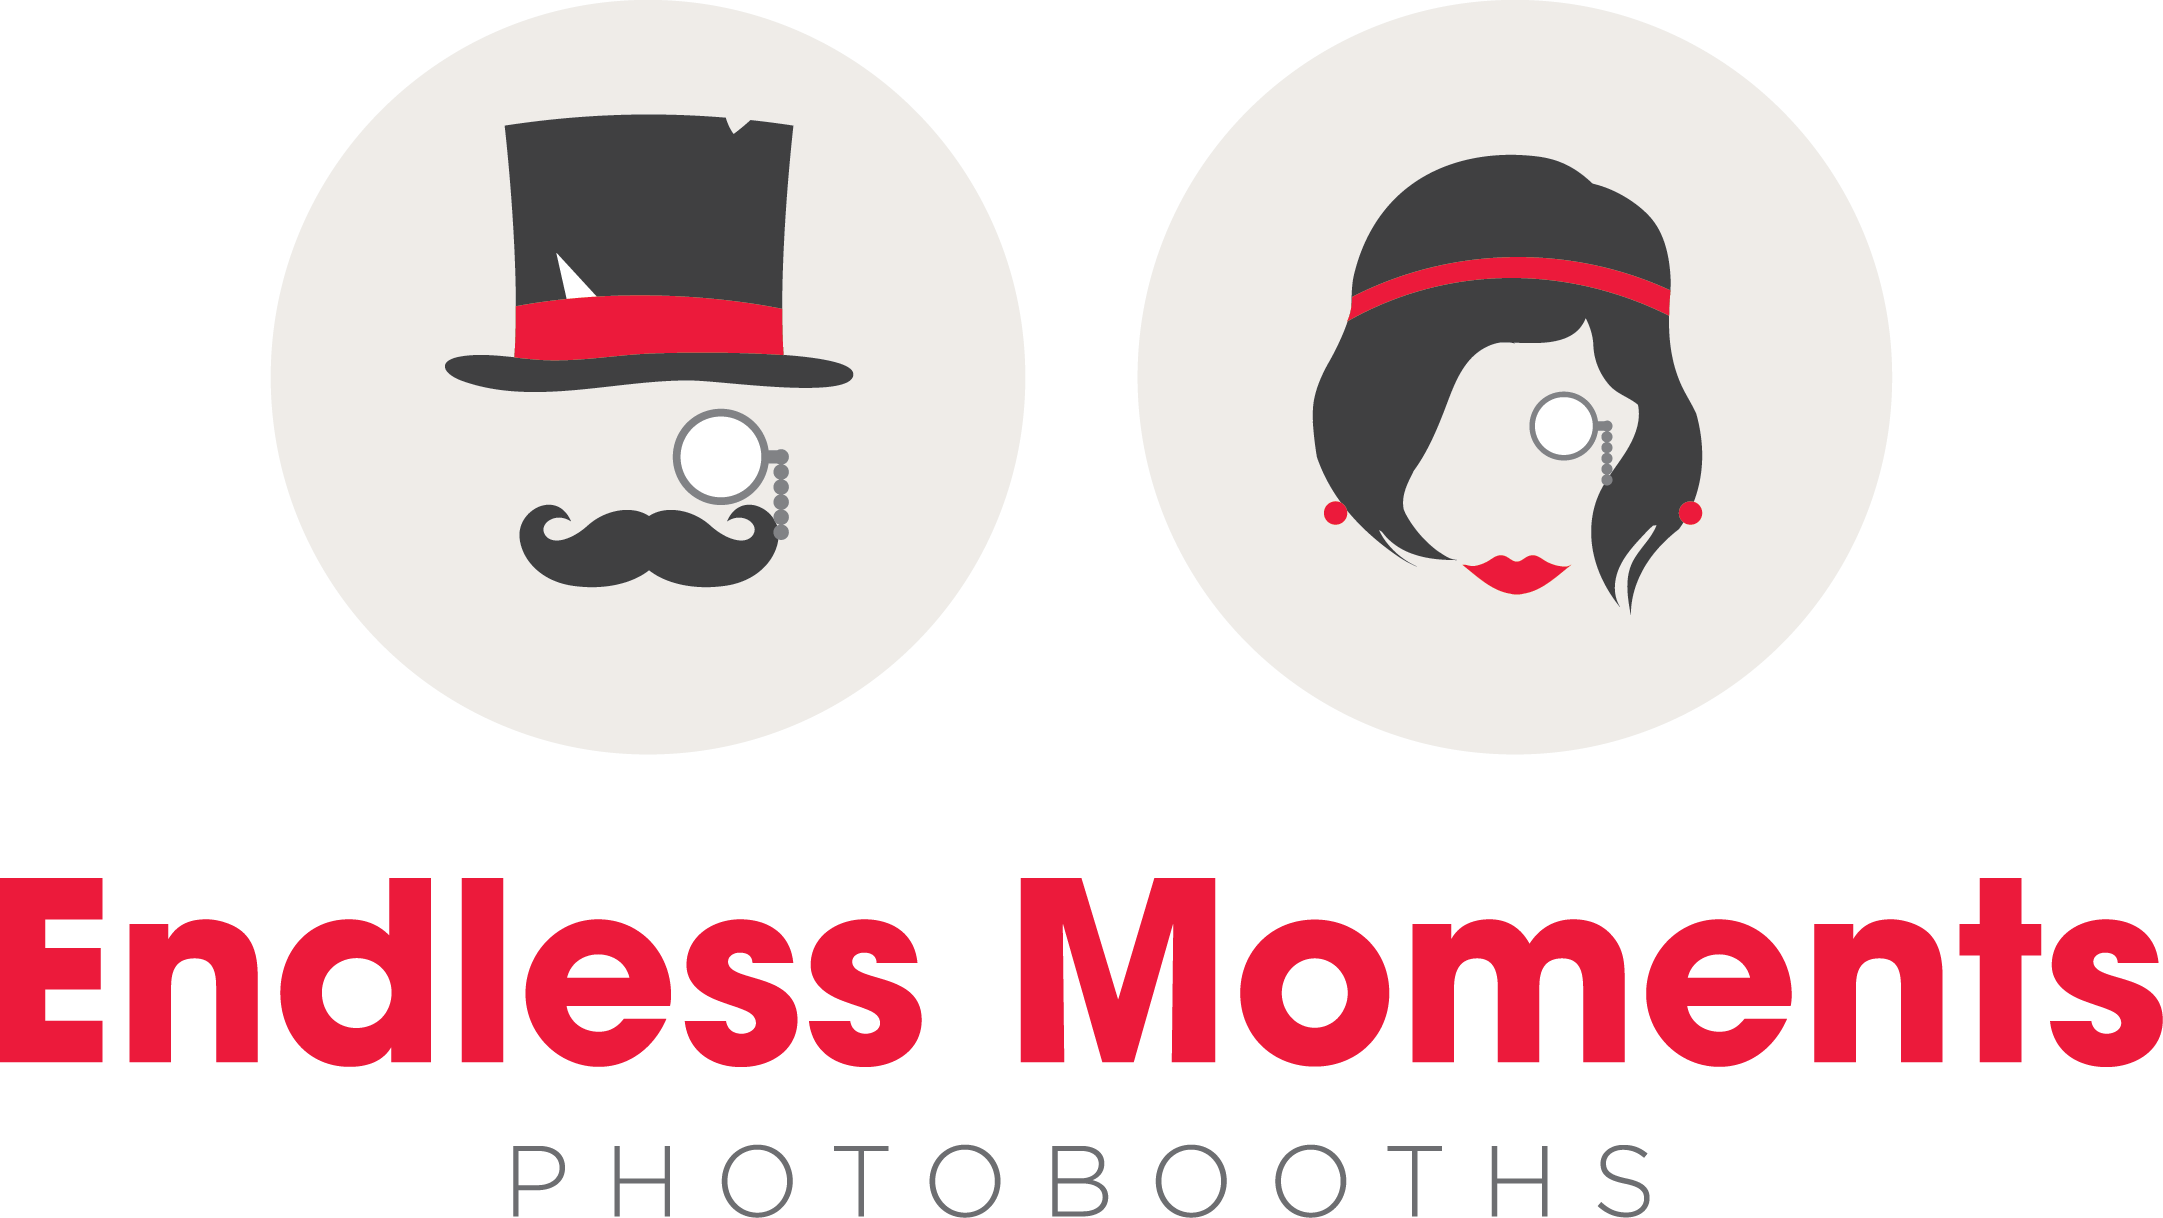 Endless Moments Photobooth Logo